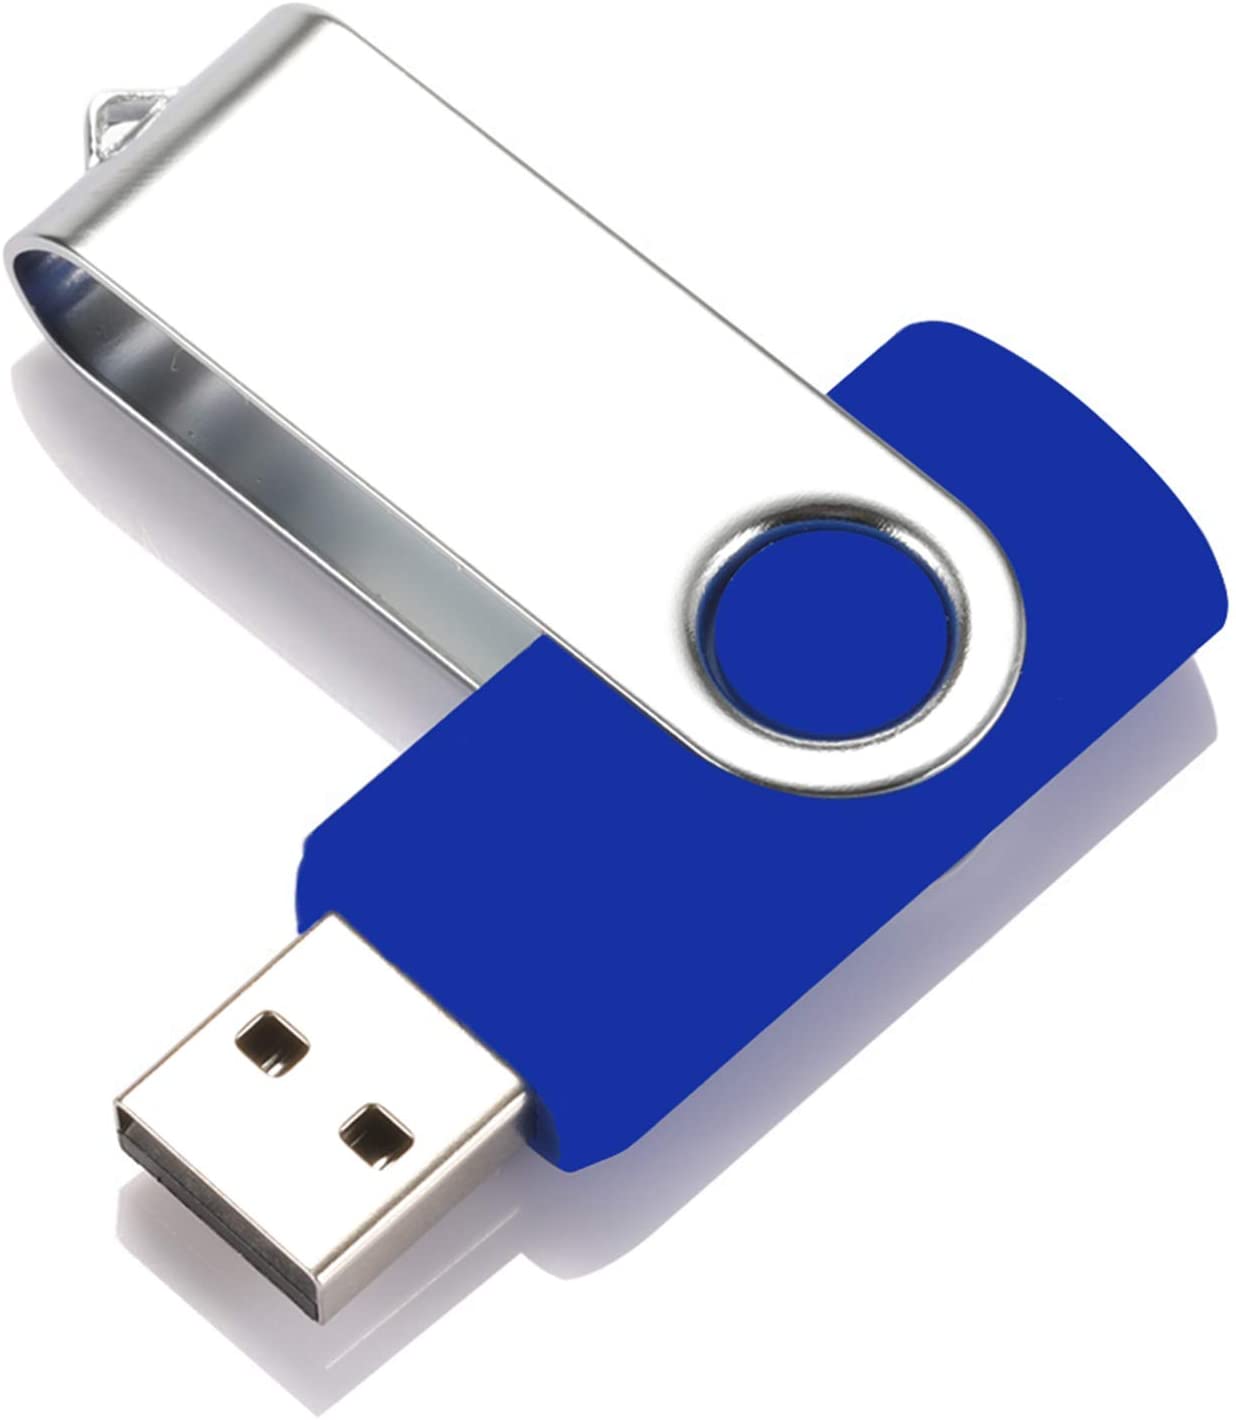 MECHEER 64GB 2.0 USB Flash Drive